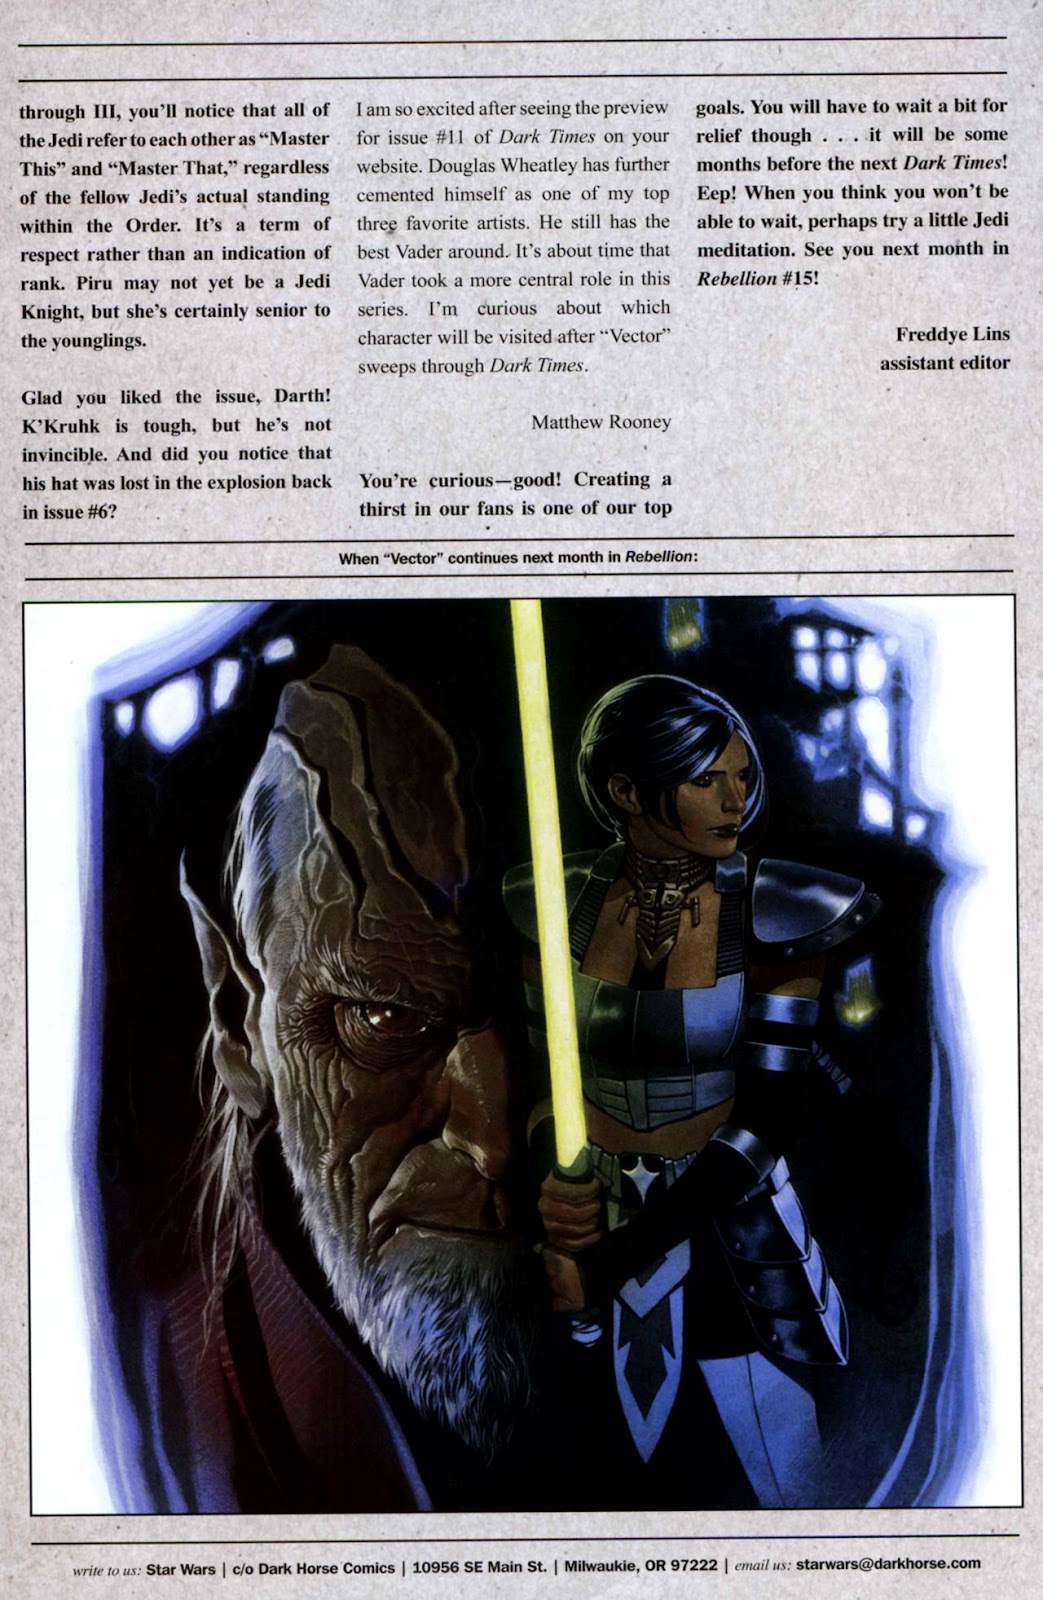 Star Wars: Dark Times issue 12 - Vector, Part 6 - Page 26